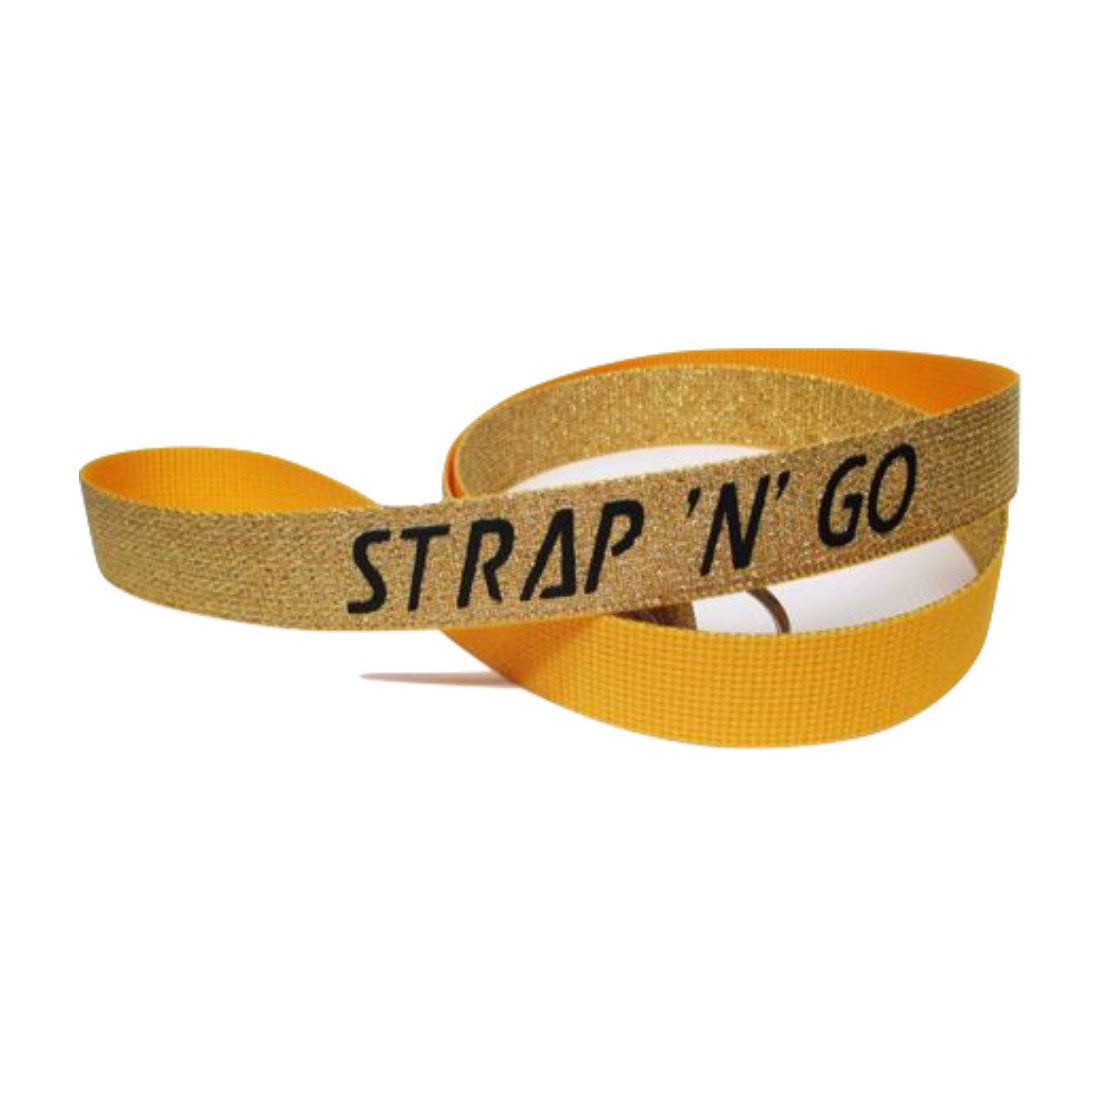 Strap N Go Skate Noose/Leash - Glitter Glitter Gold Roller Skate Accessories